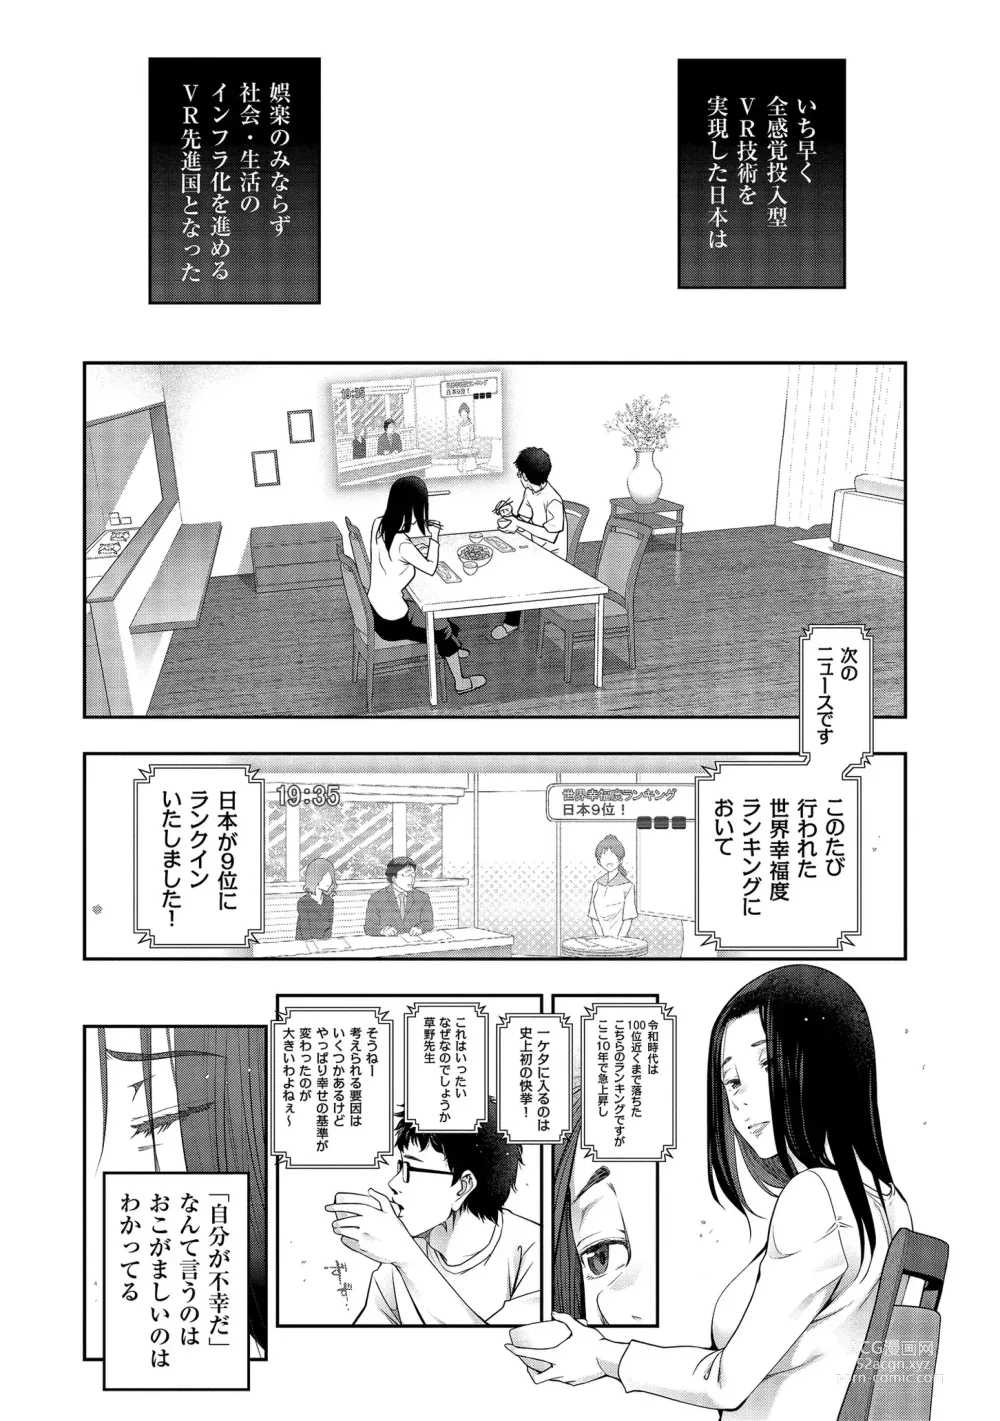 Page 11 of manga Shiawase no Kuni